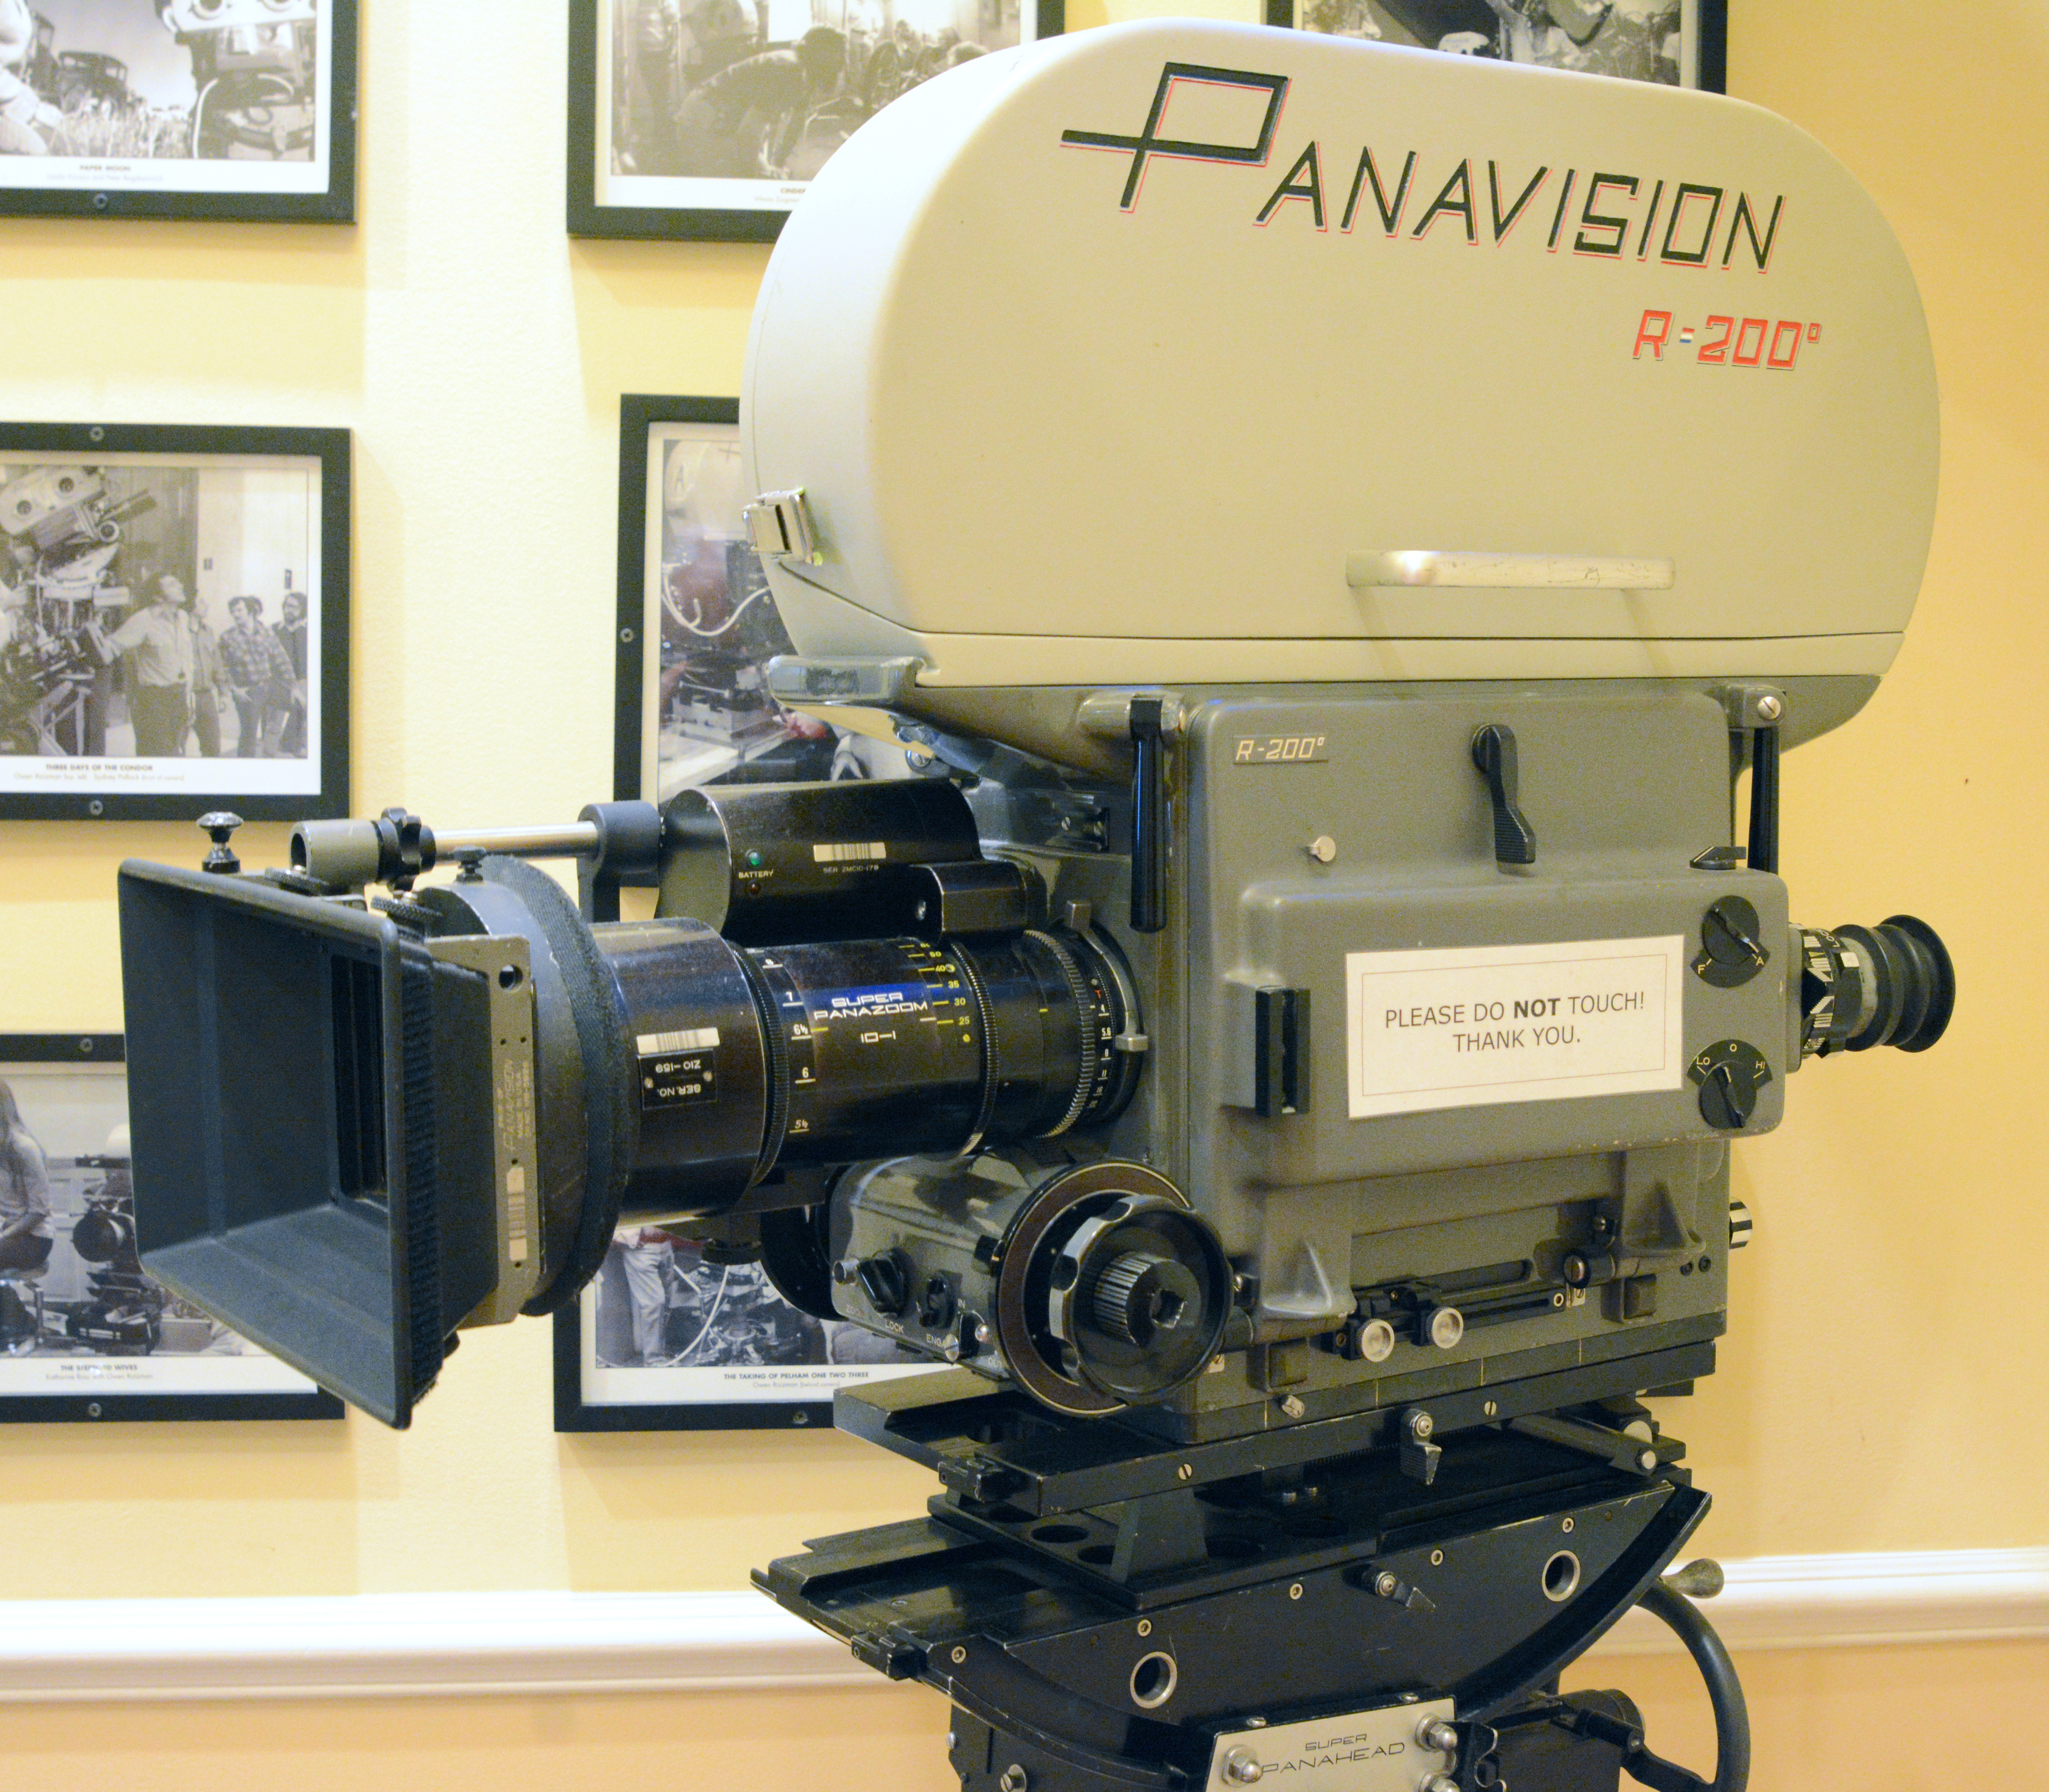 https://upload.wikimedia.org/wikipedia/commons/7/78/Panavision_movie_camera.JPG